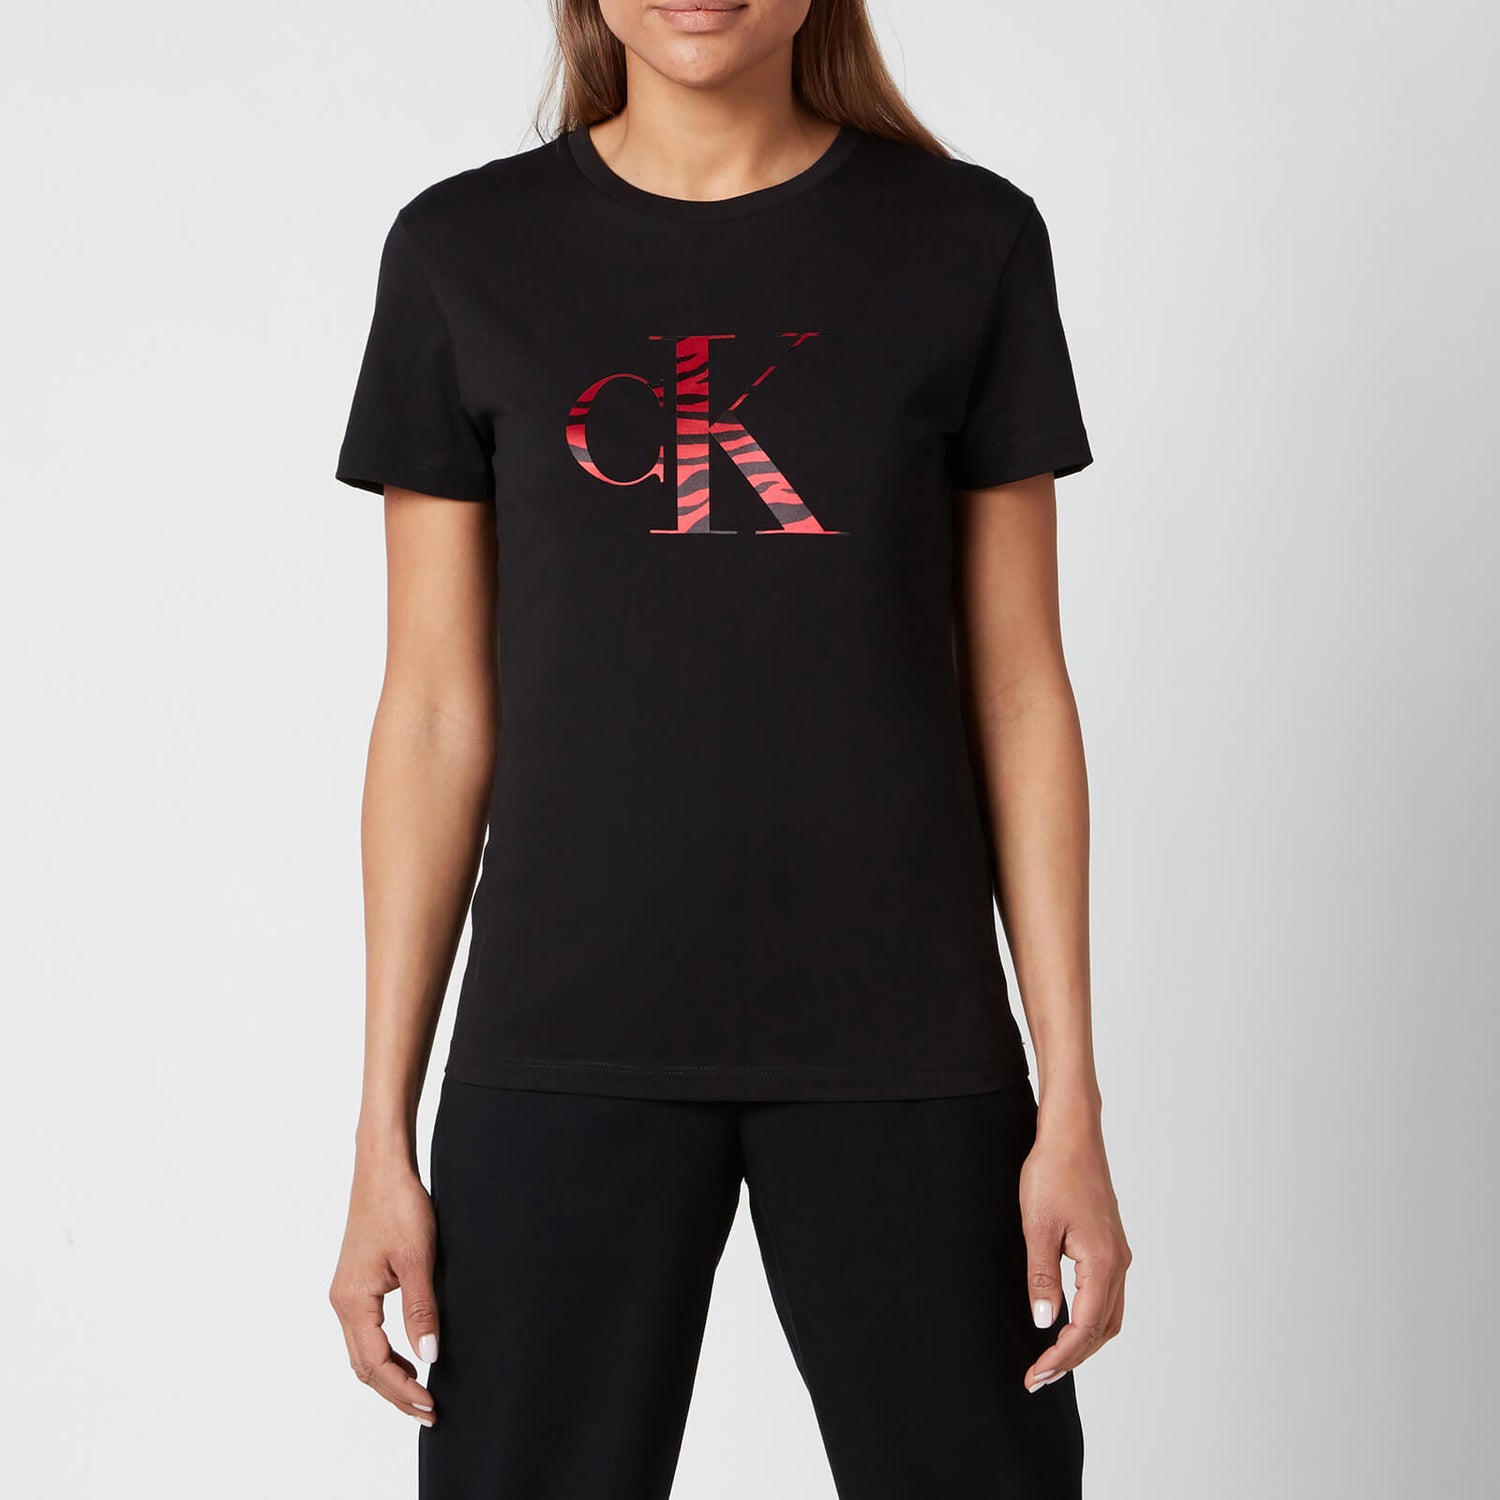 Calvin Klein Jeans Women's Zebra Ck T-Shirt - Ck Black